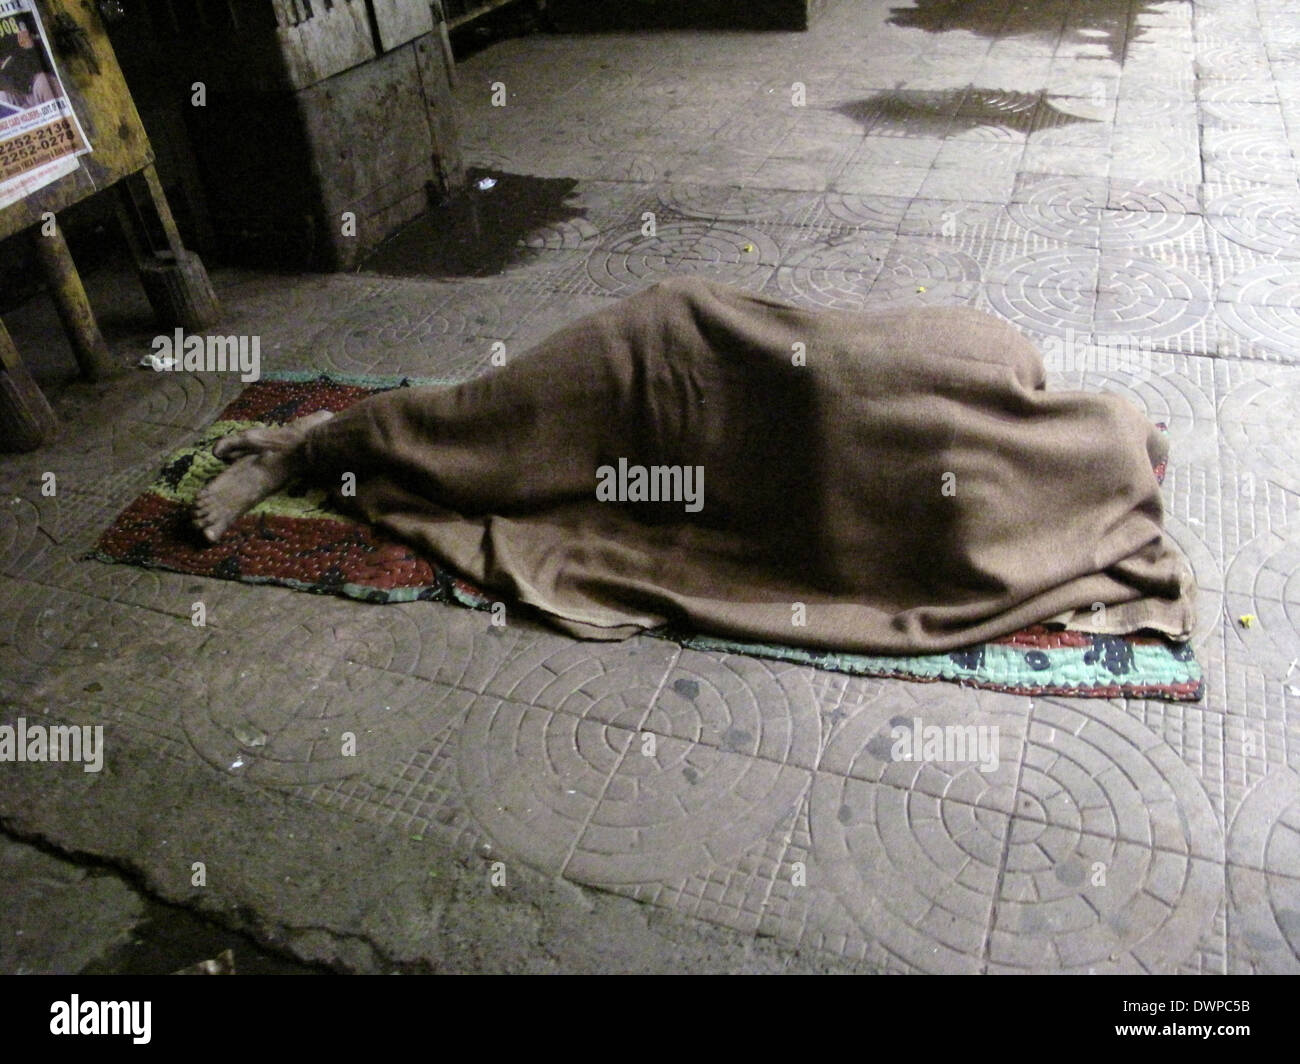 Streets of Kolkata, man sleeping on the streets of Kolkata,India on January 30, 2009. Stock Photo